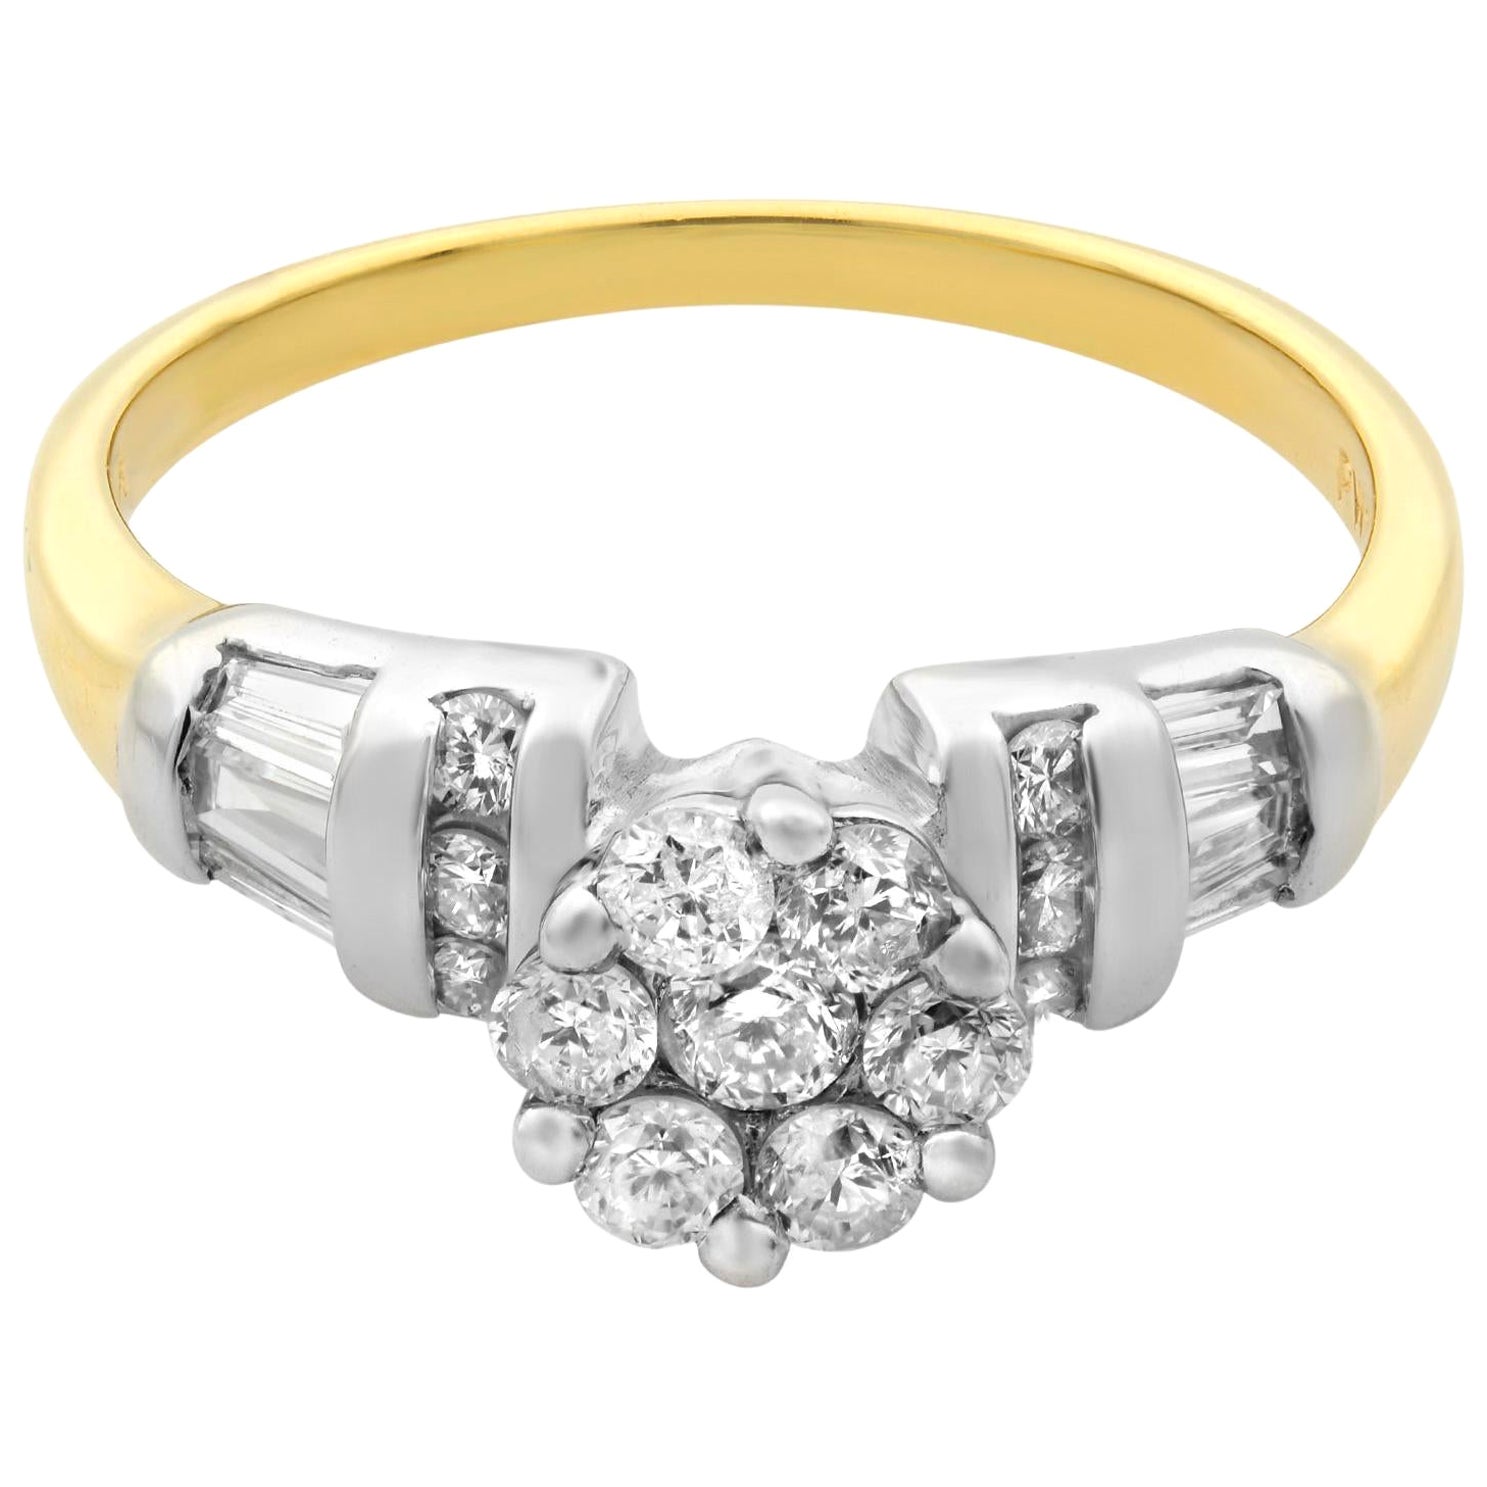 Rachel Koen Diamond Wedding Ring 14K White and Yellow Gold 0.25cttw For Sale